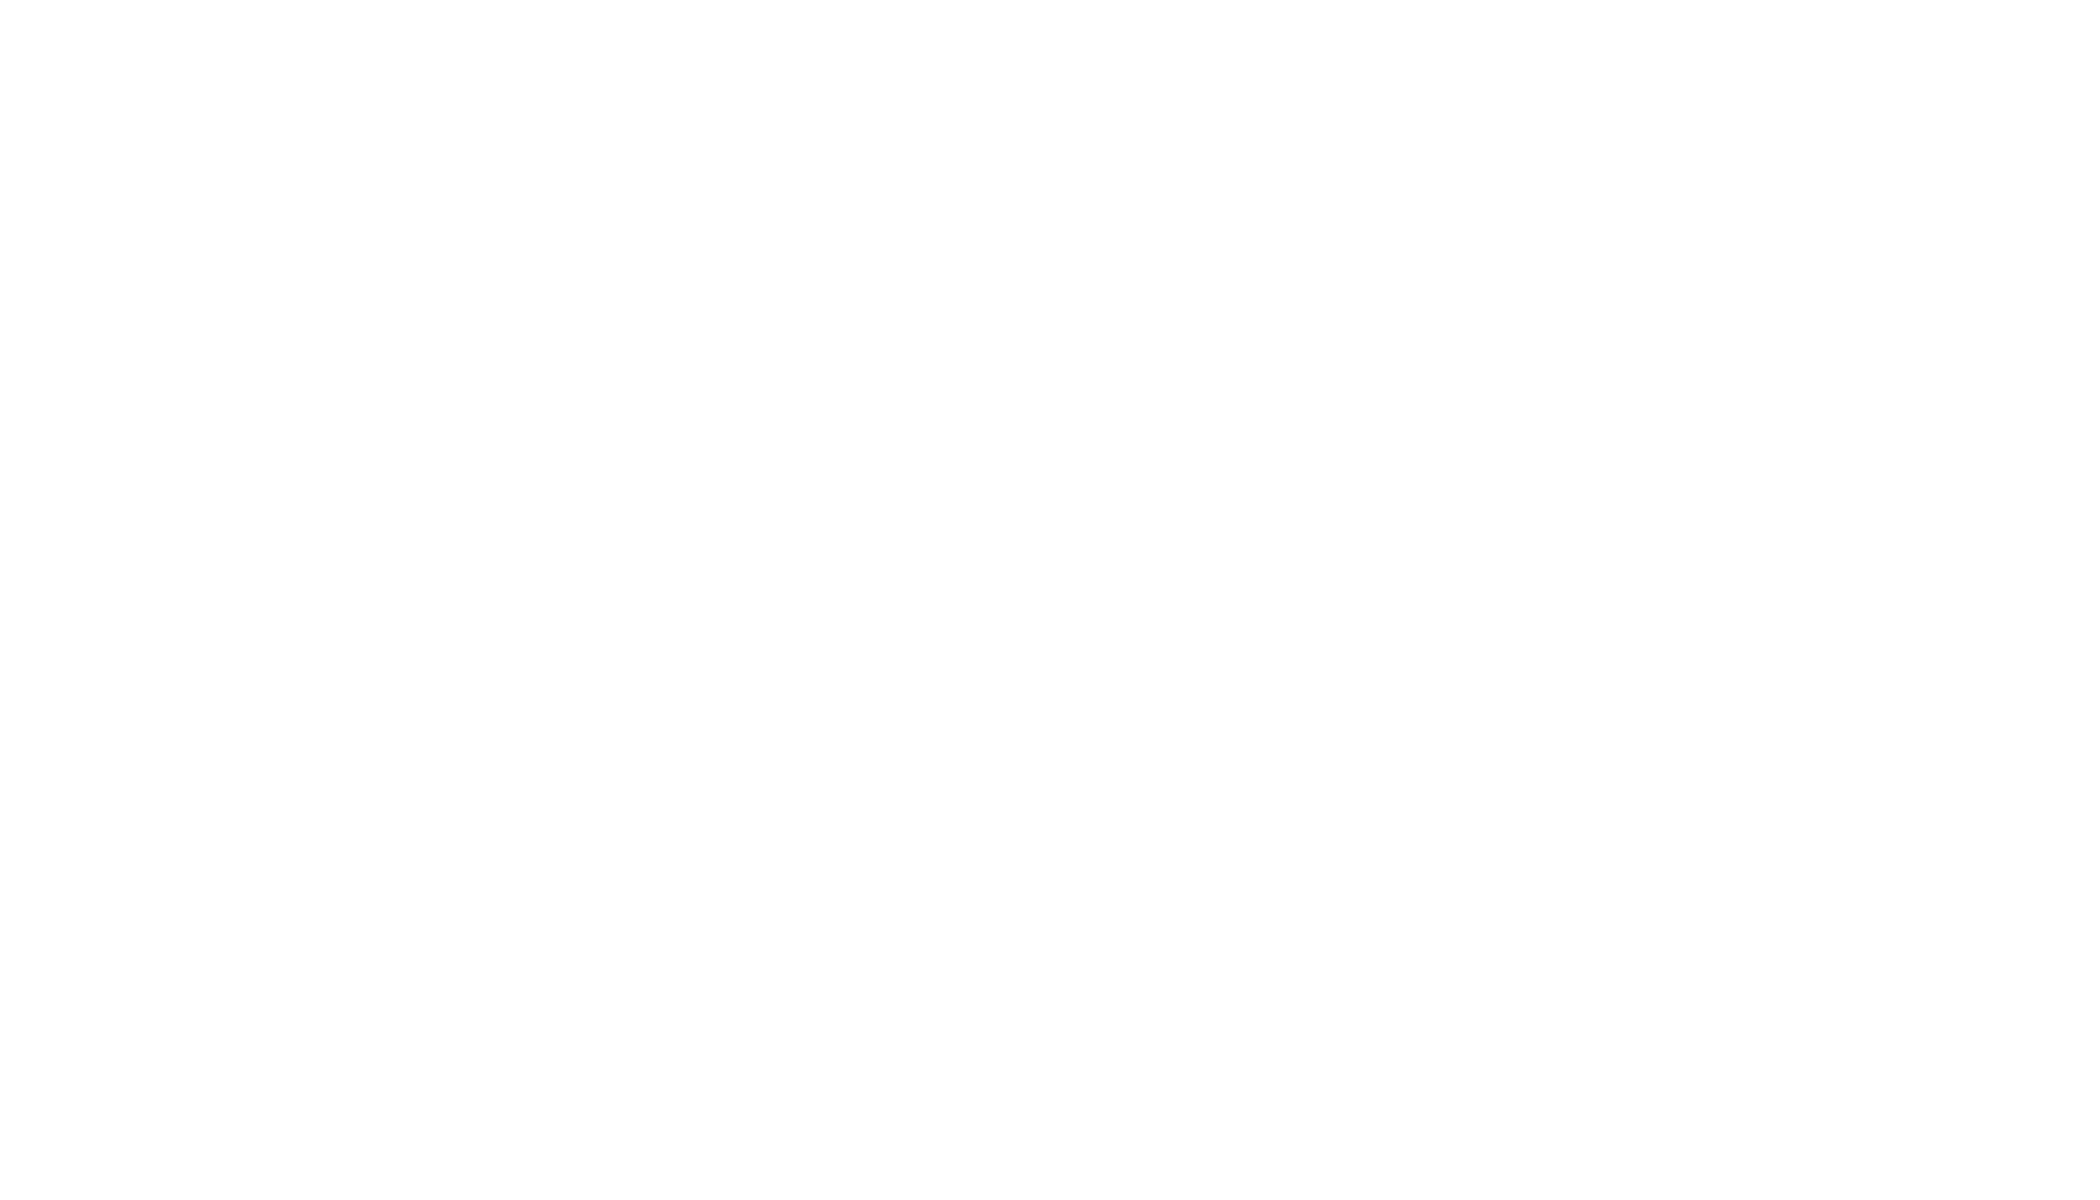 WFIU 70th Anniversary